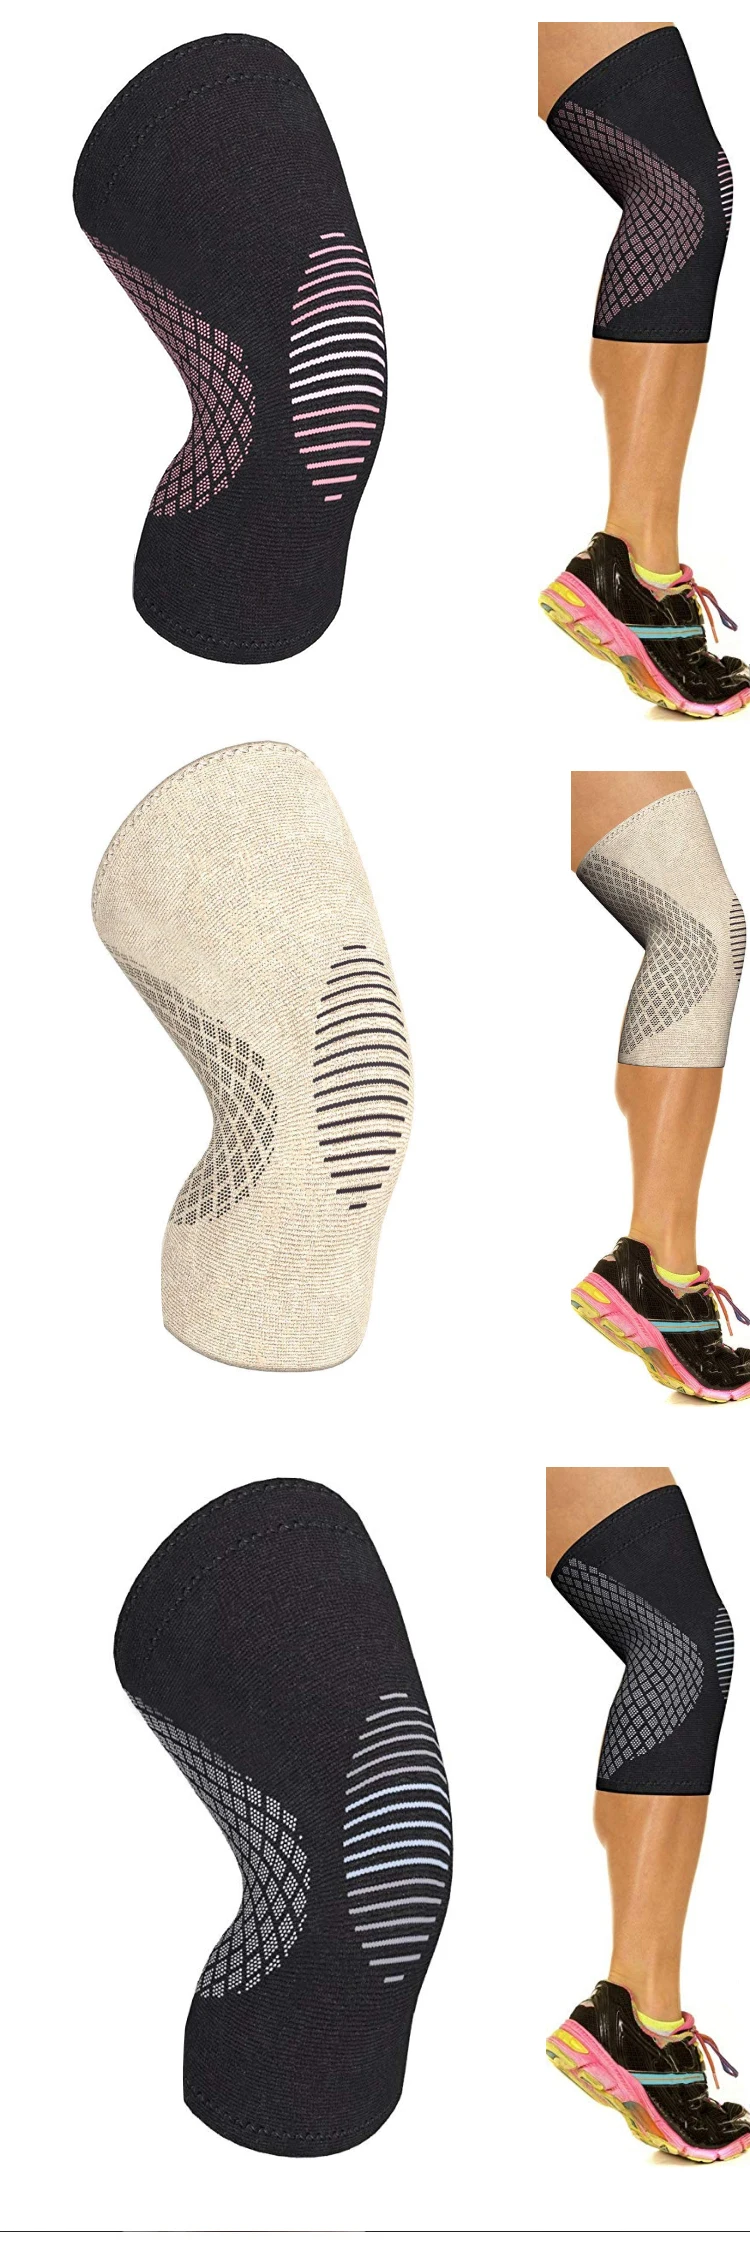 Enerup Wholesale Weightlifting Warm Volleyball Tennis Flexible Knee Pad Wraps Sleeves Brace